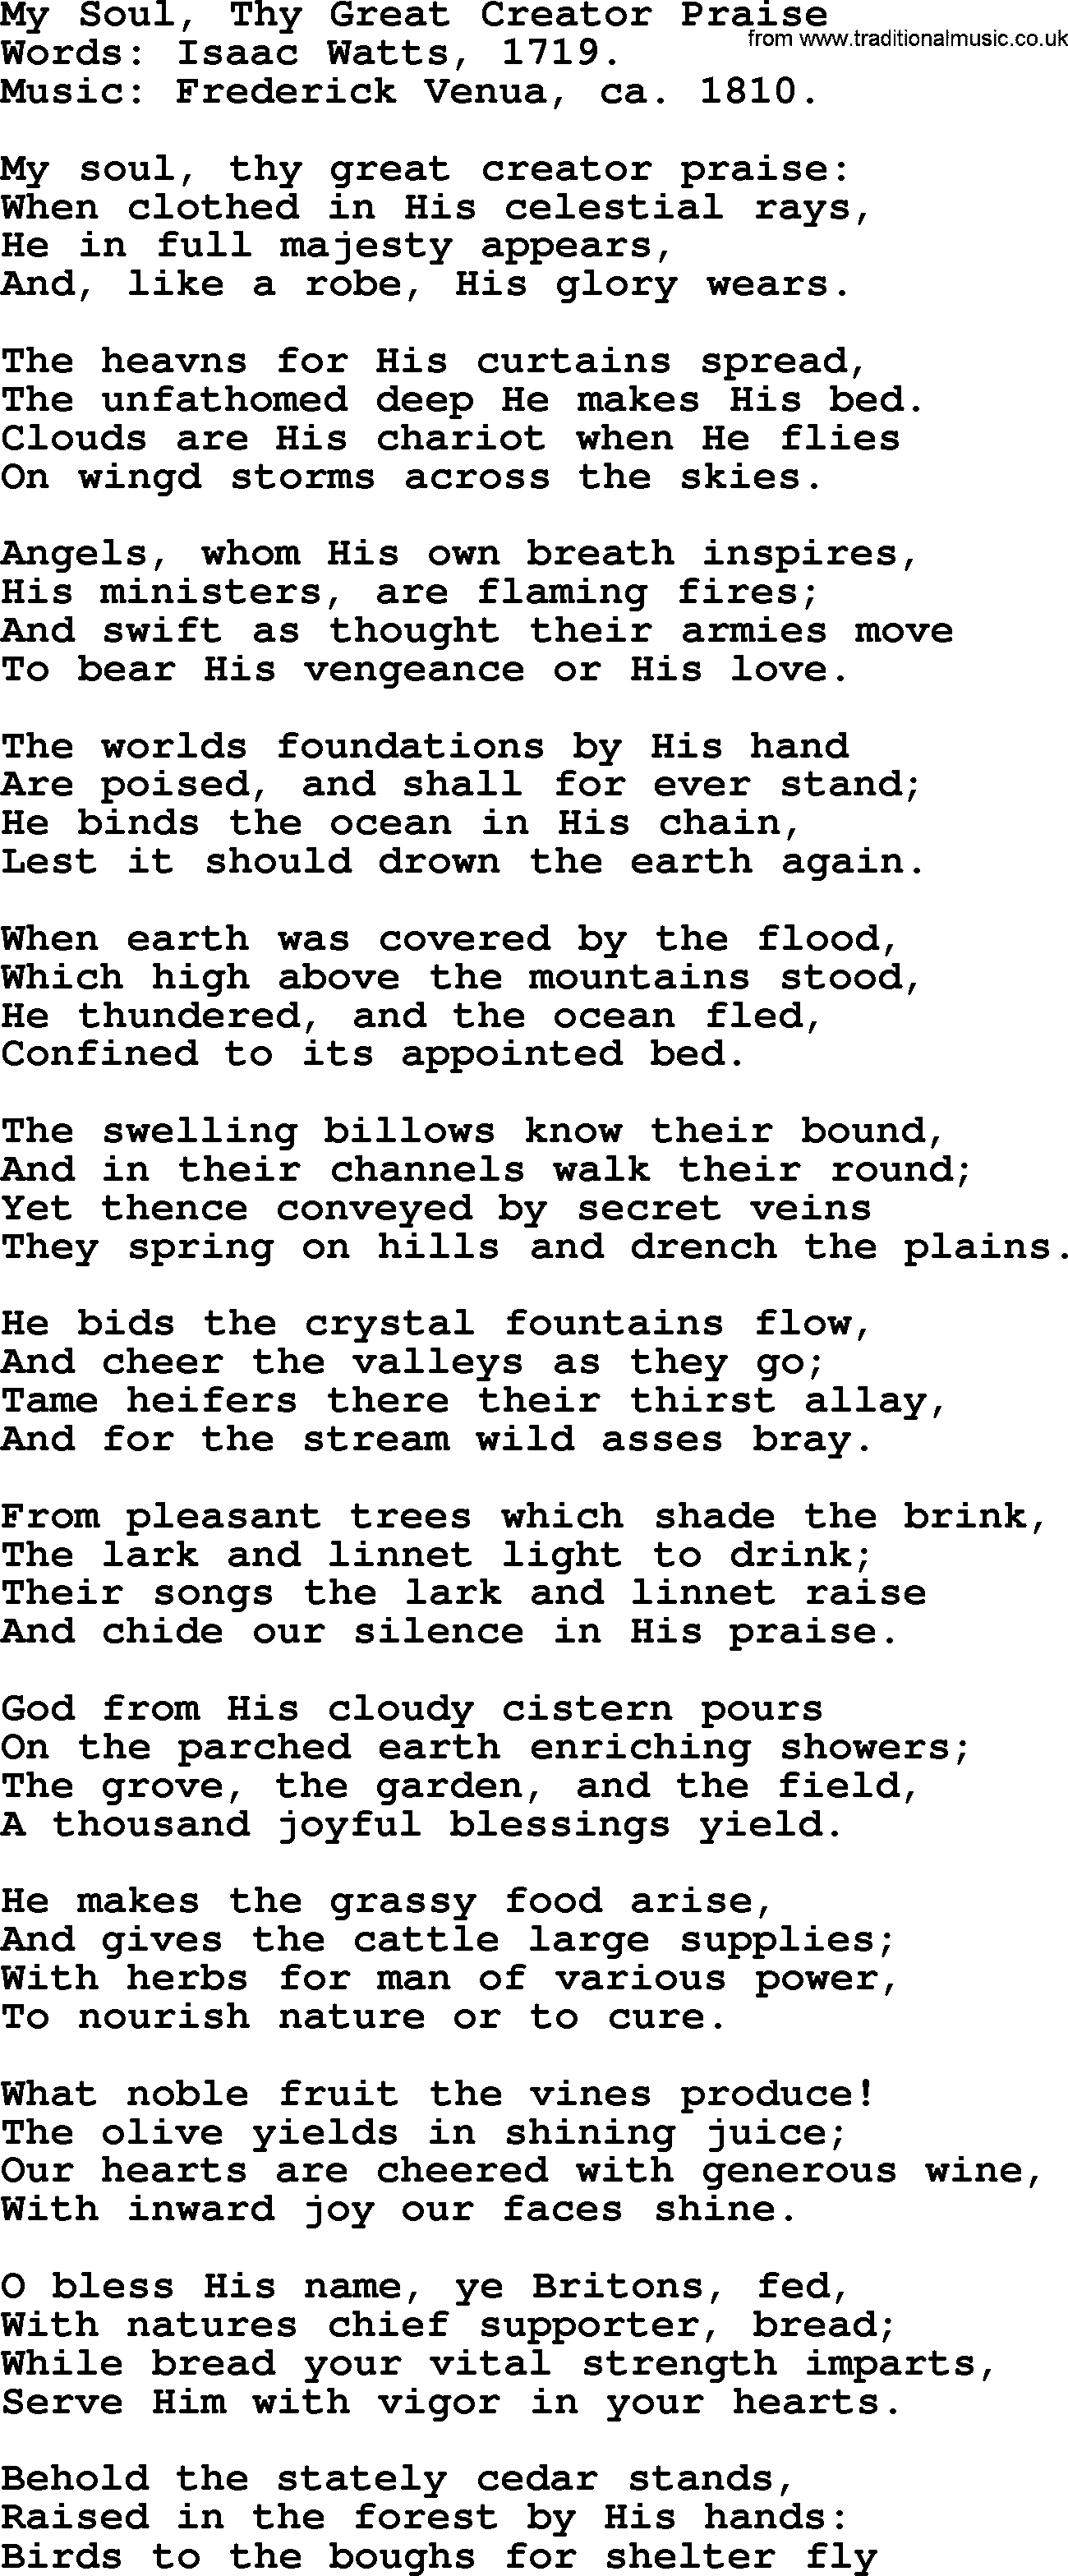 Isaac Watts Christian hymn: My Soul, Thy Great Creator Praise- lyricss